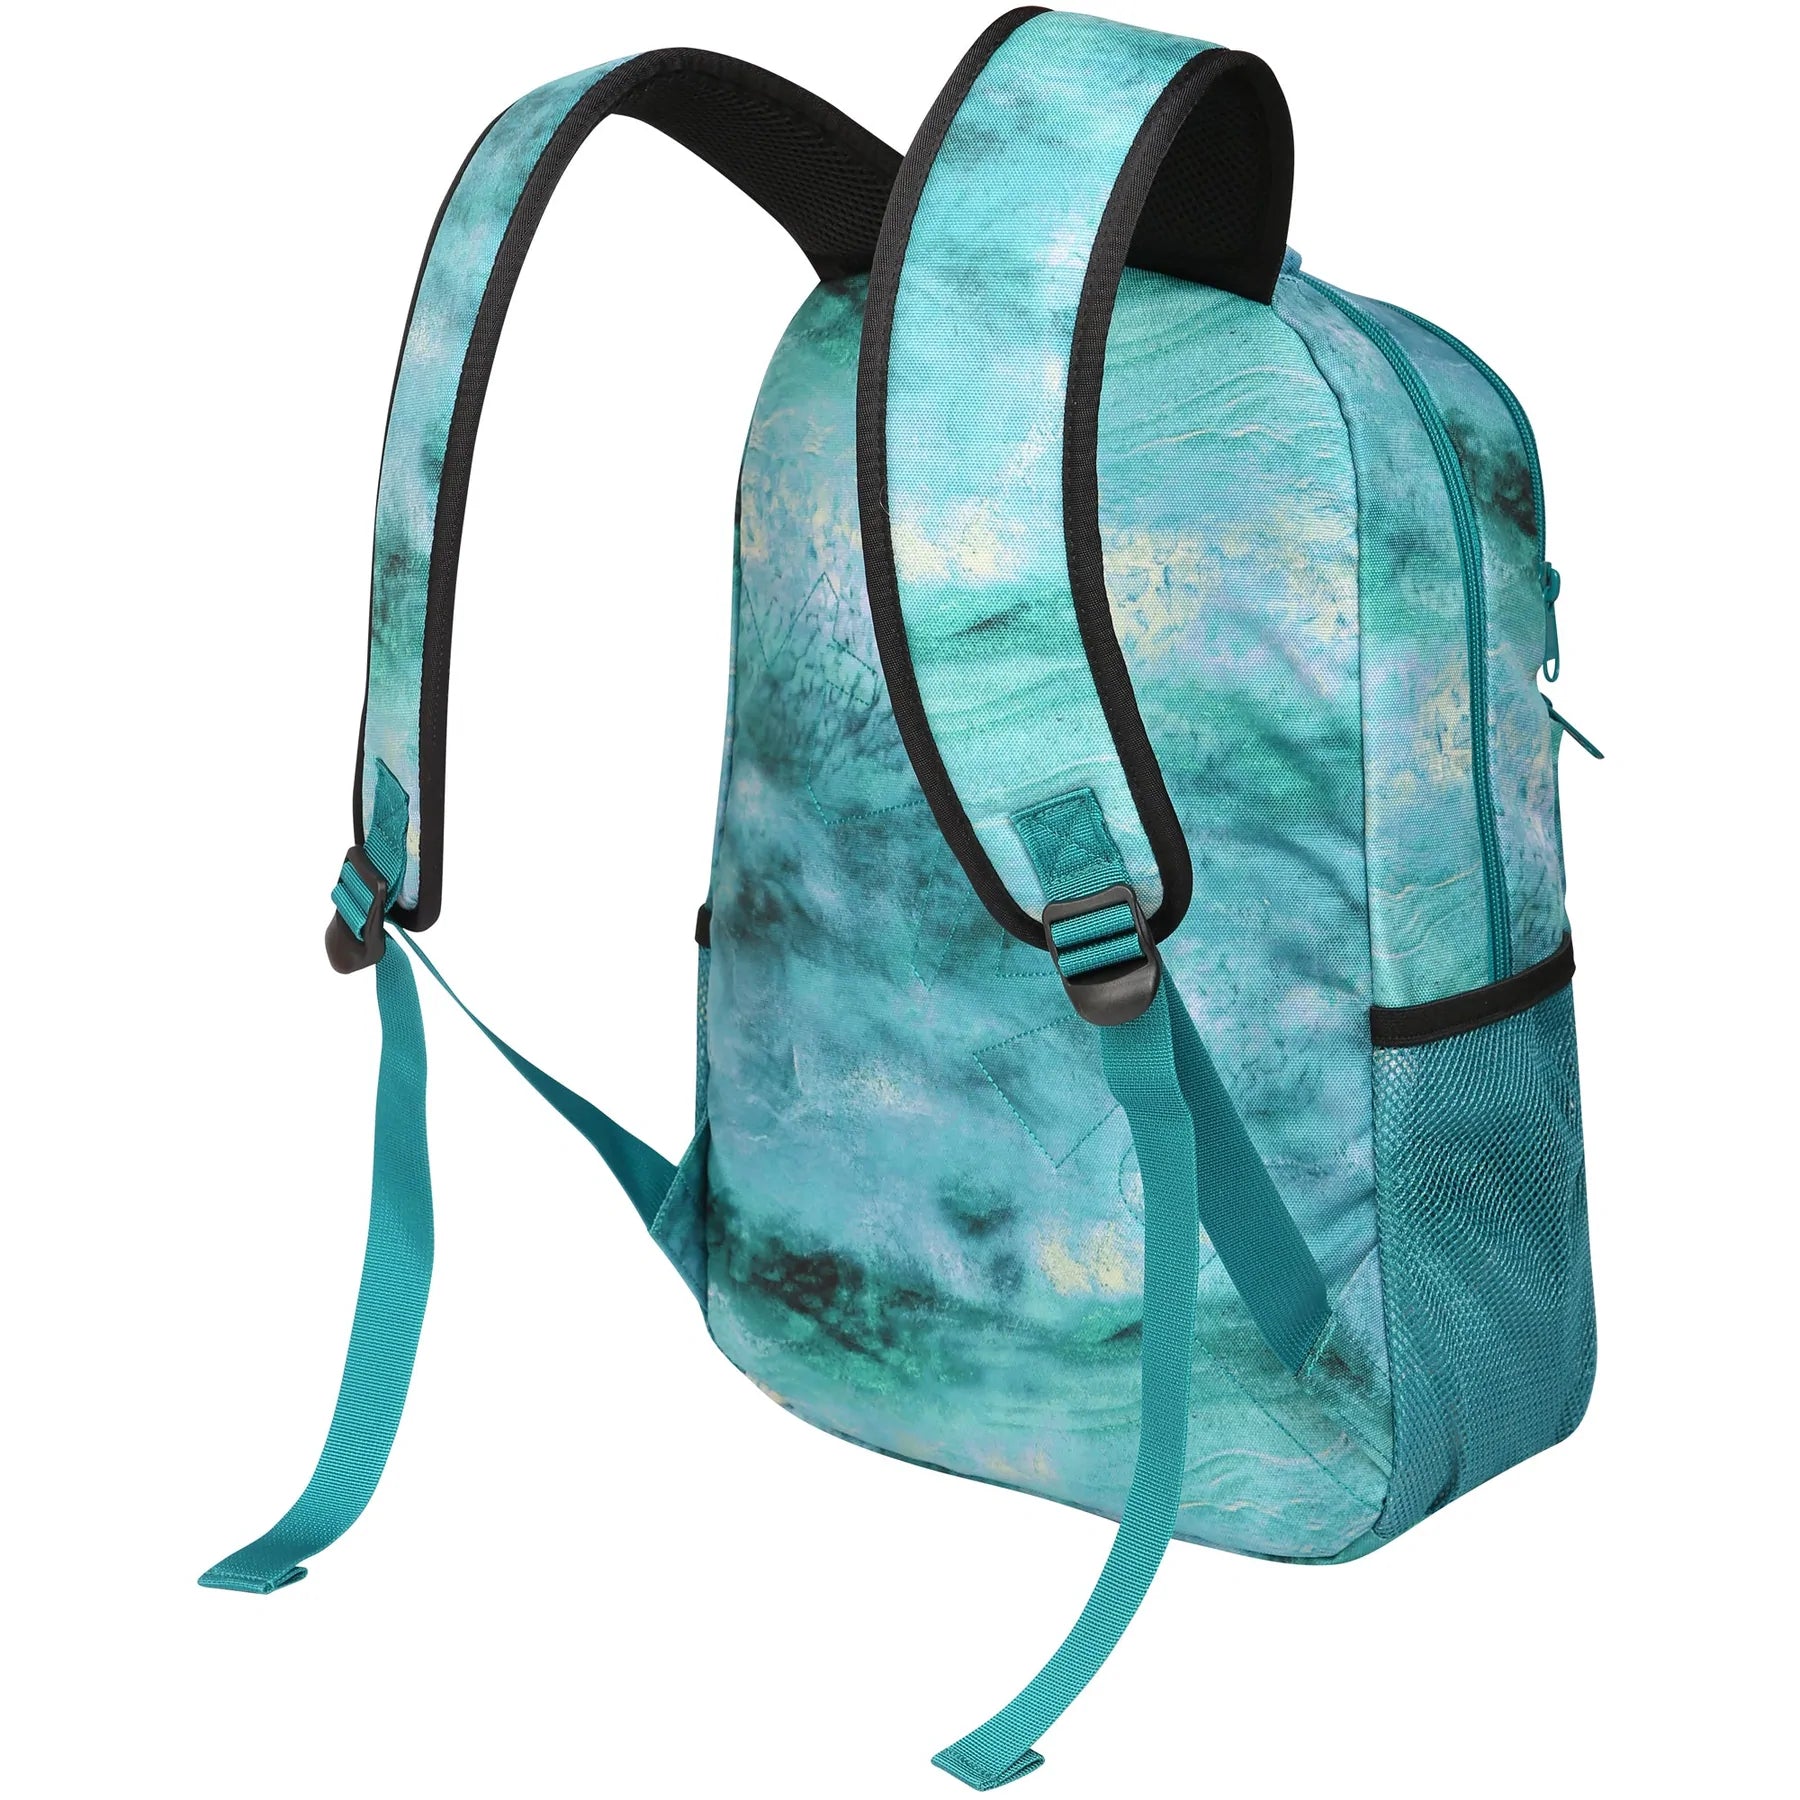 Packwood Backpack